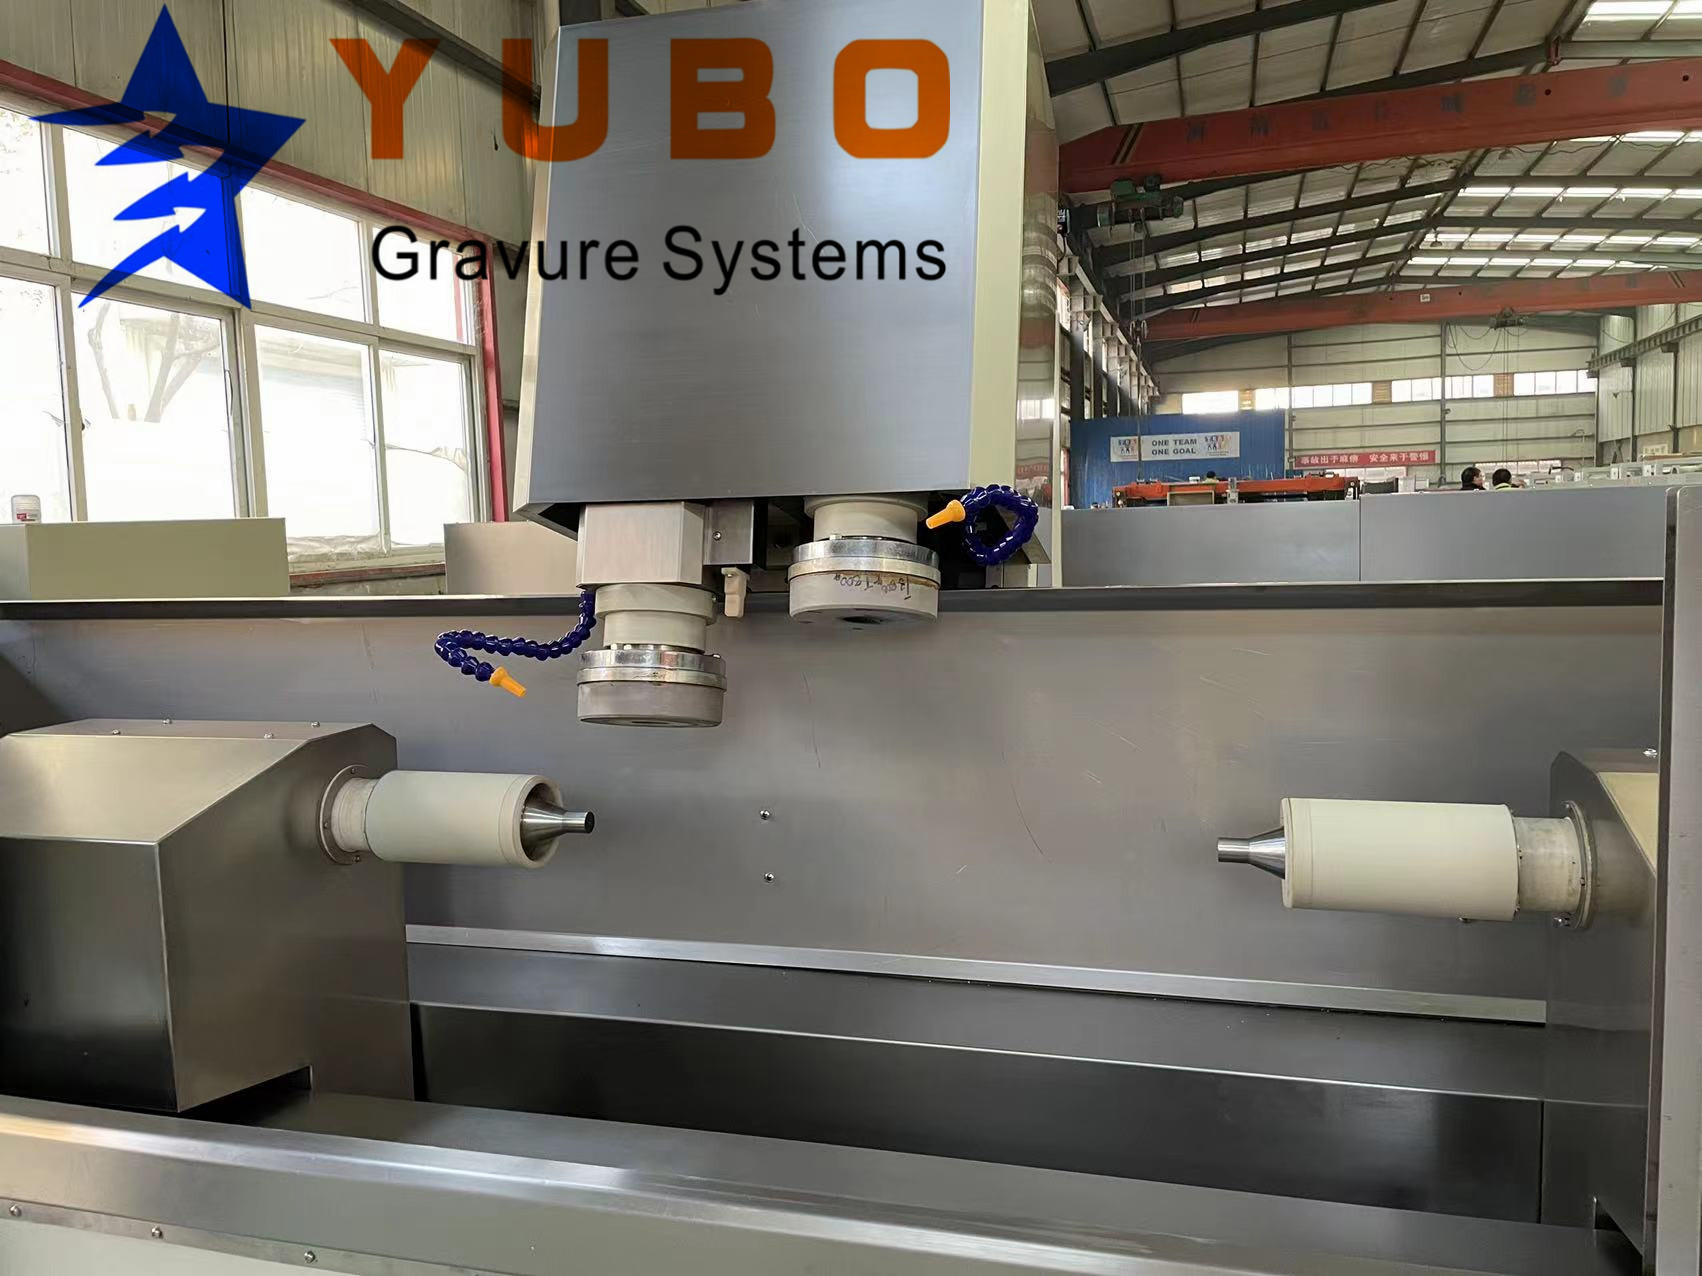 China Head Pressure Adjustable Copper Grinding Machine for intaglio printing wholesale